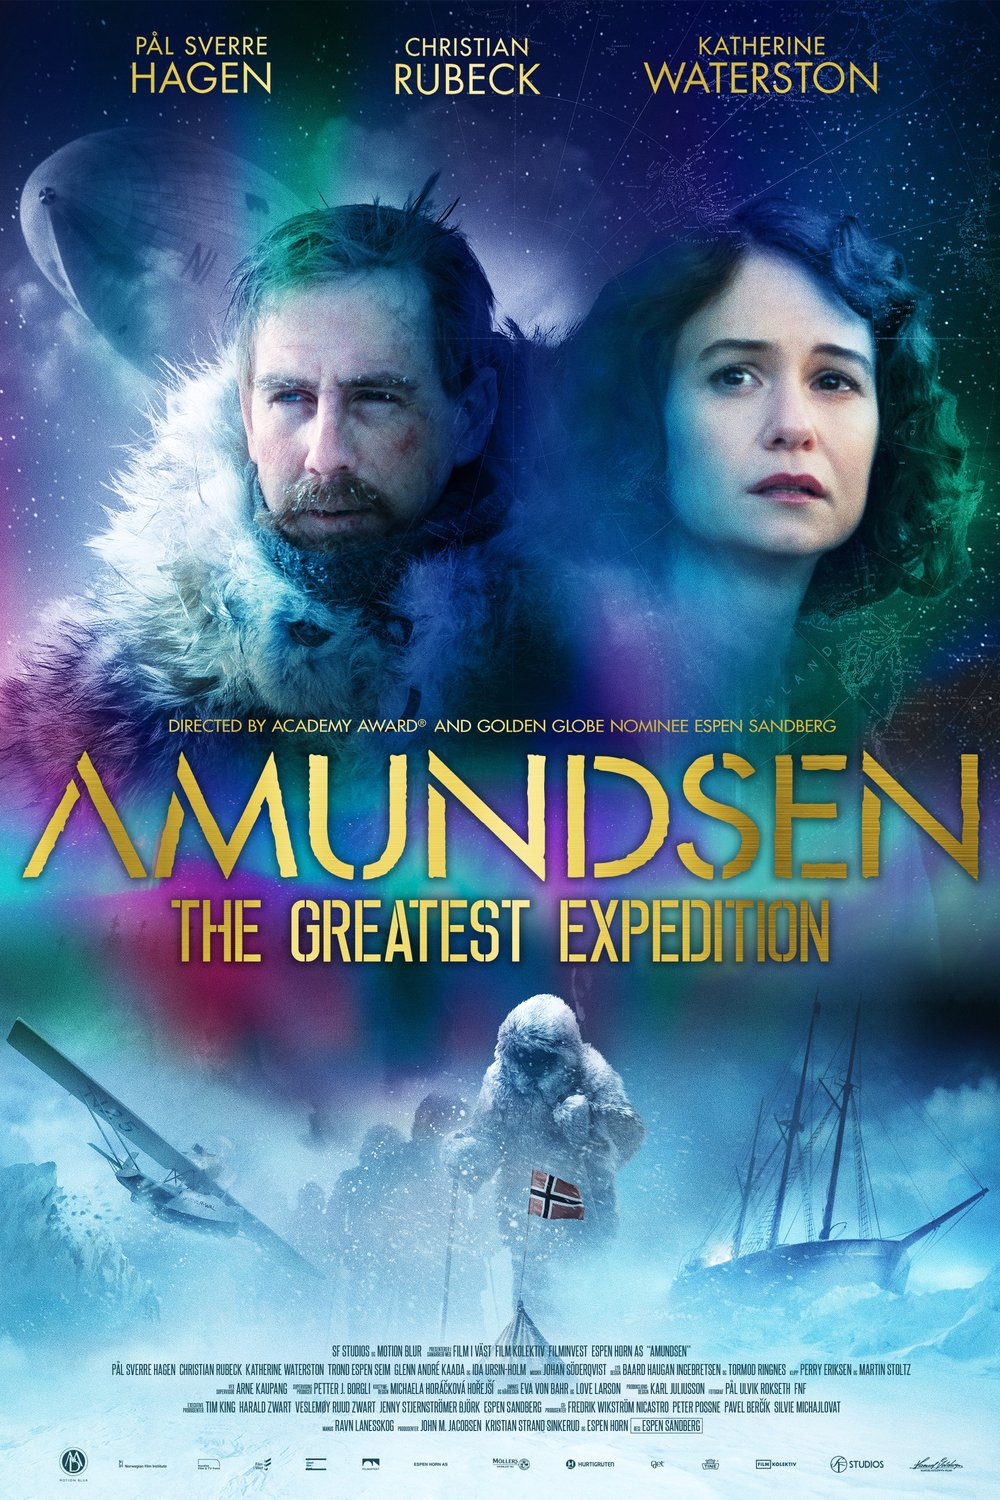 L'affiche du film Amundsen: The Greatest Expedition